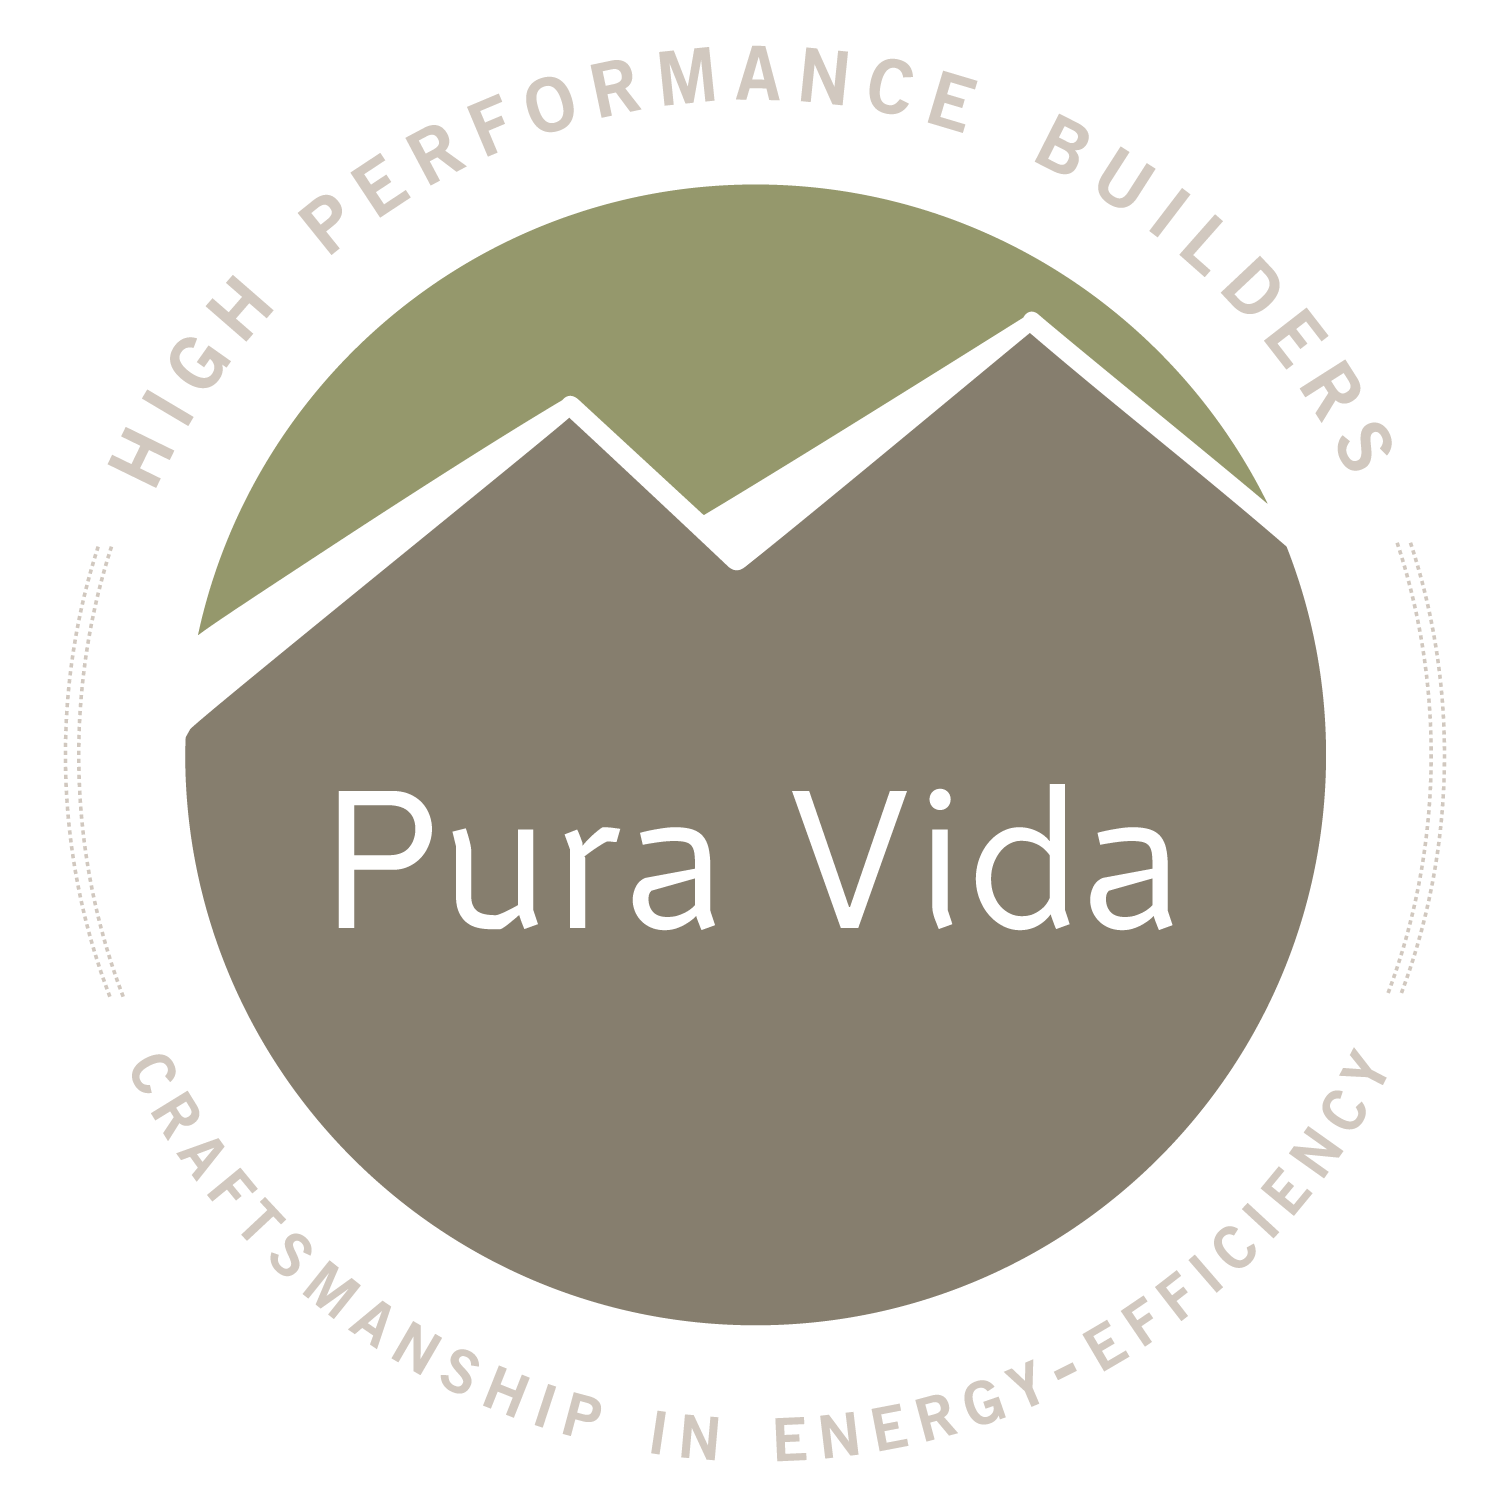 Pura Vida High Performance Builders company logo